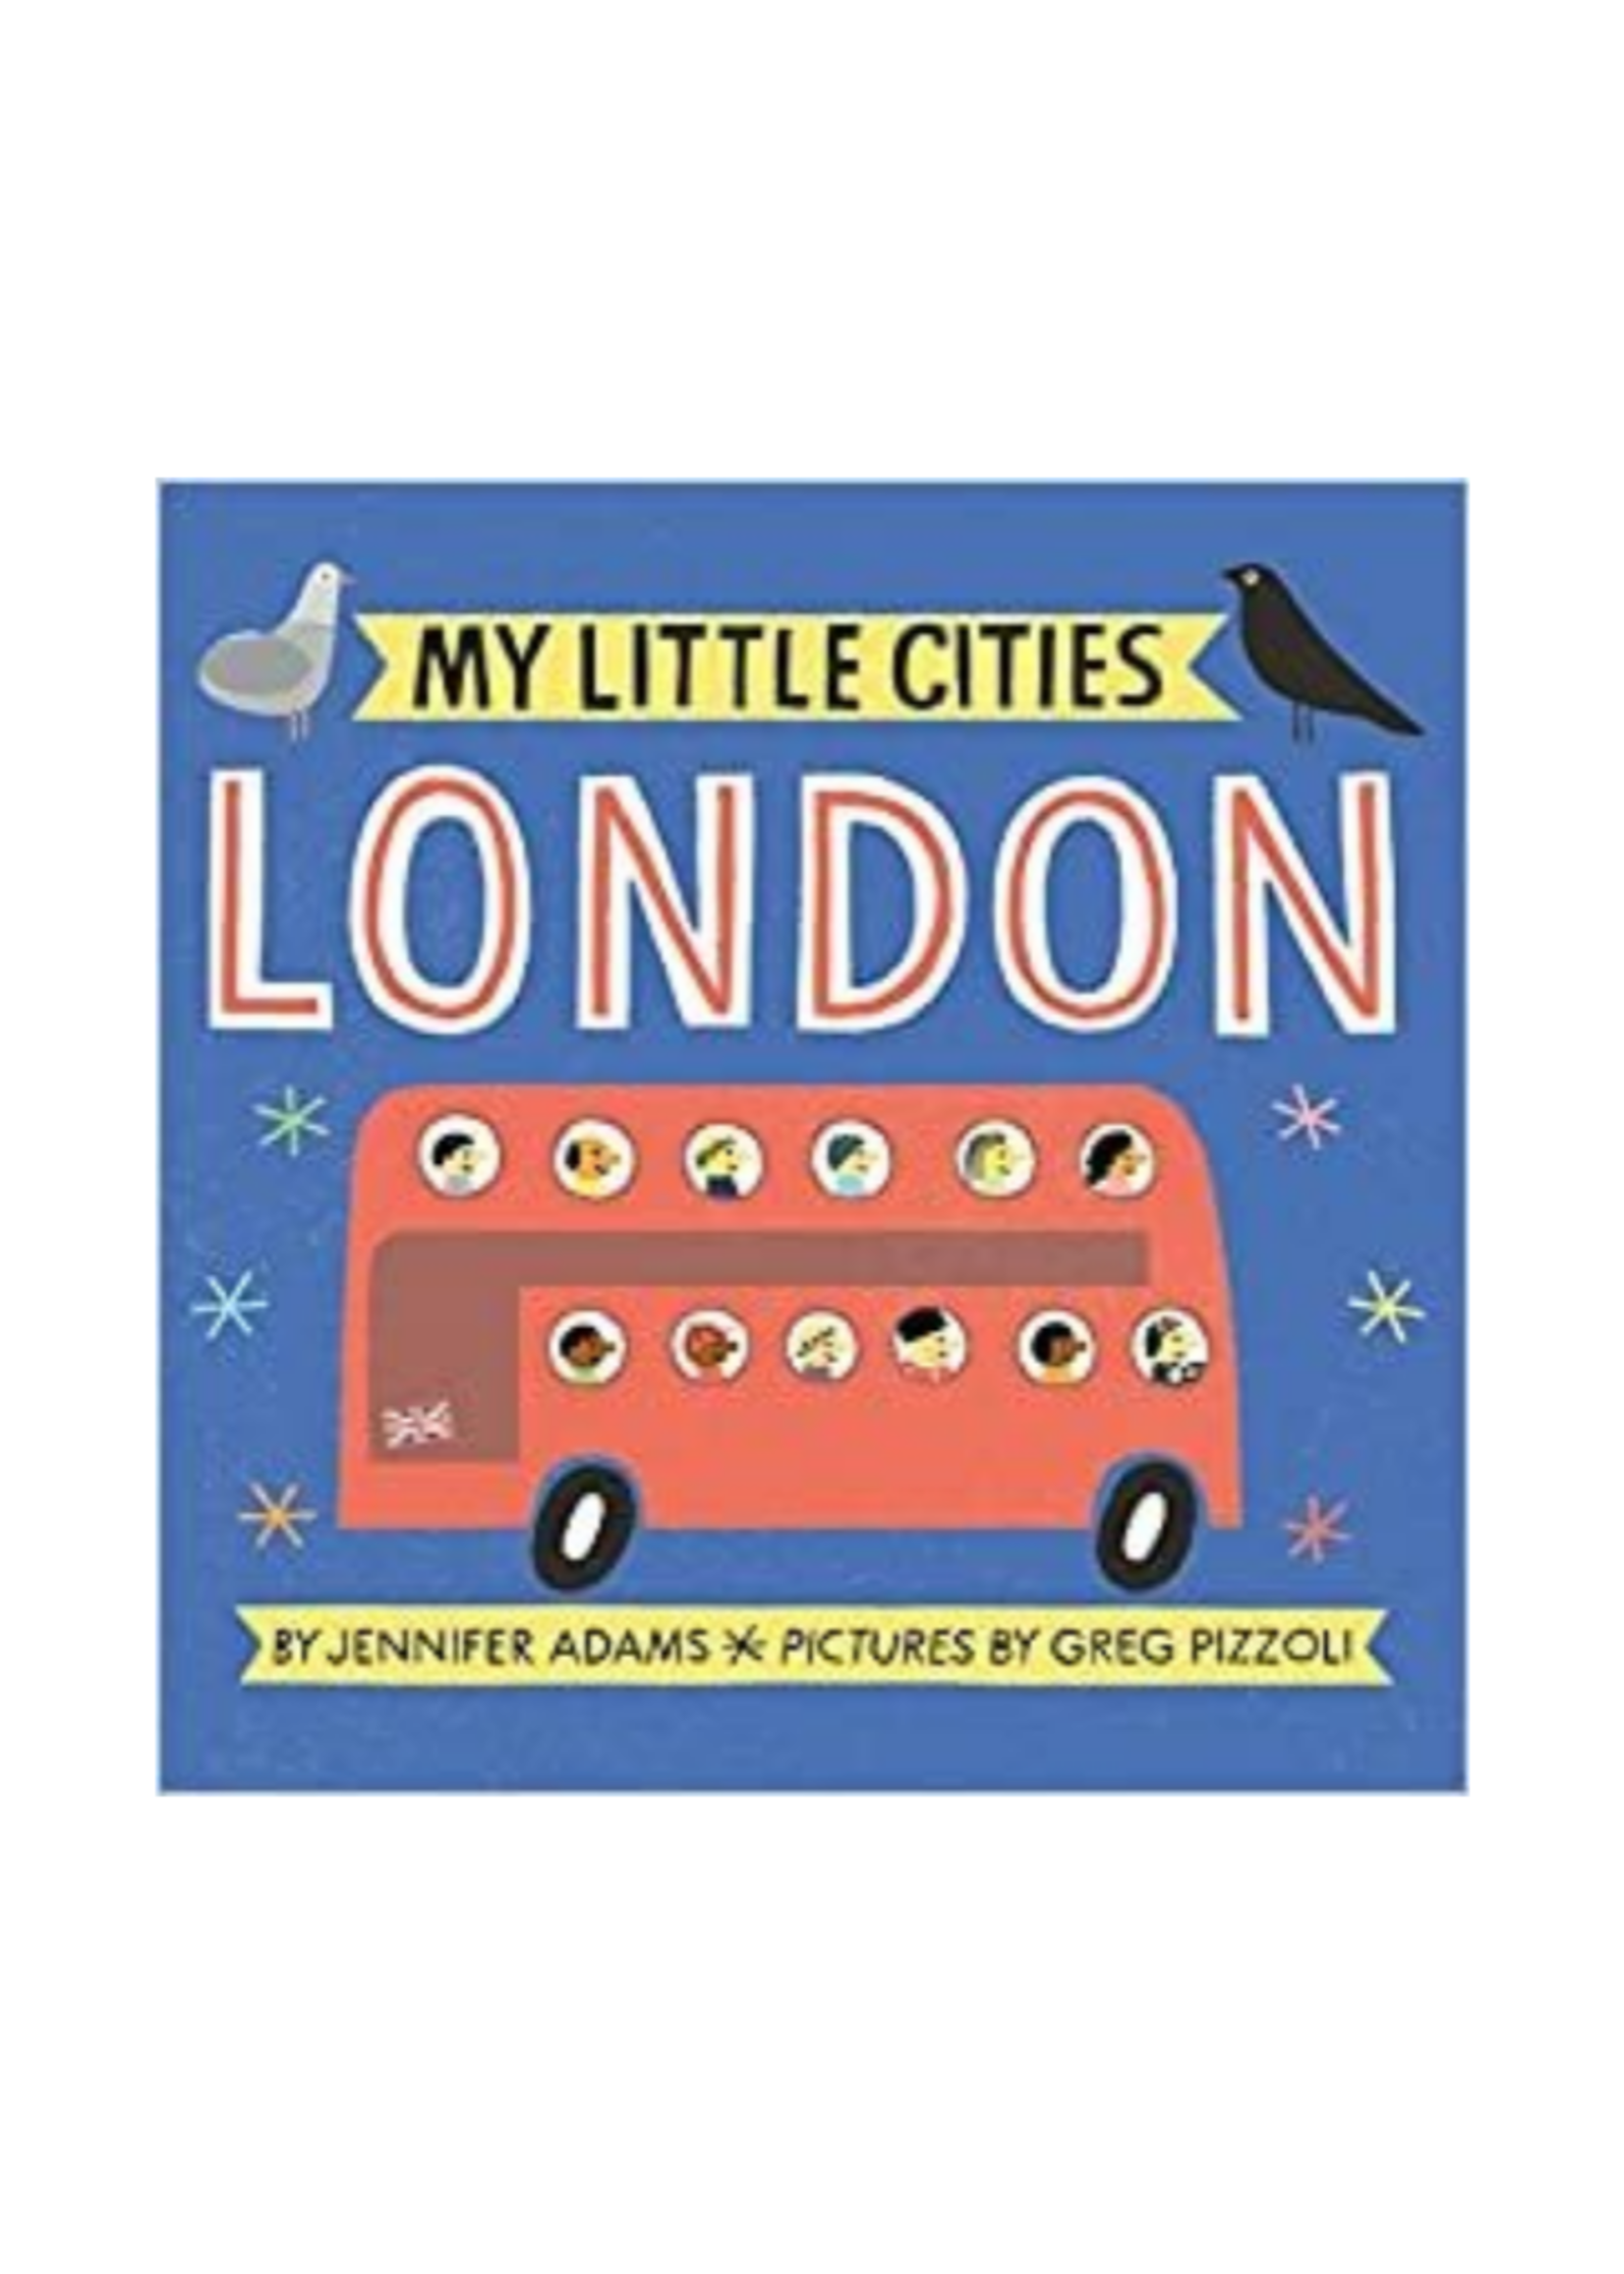 Chronicles My Little Cities: London by Jennifer Adams